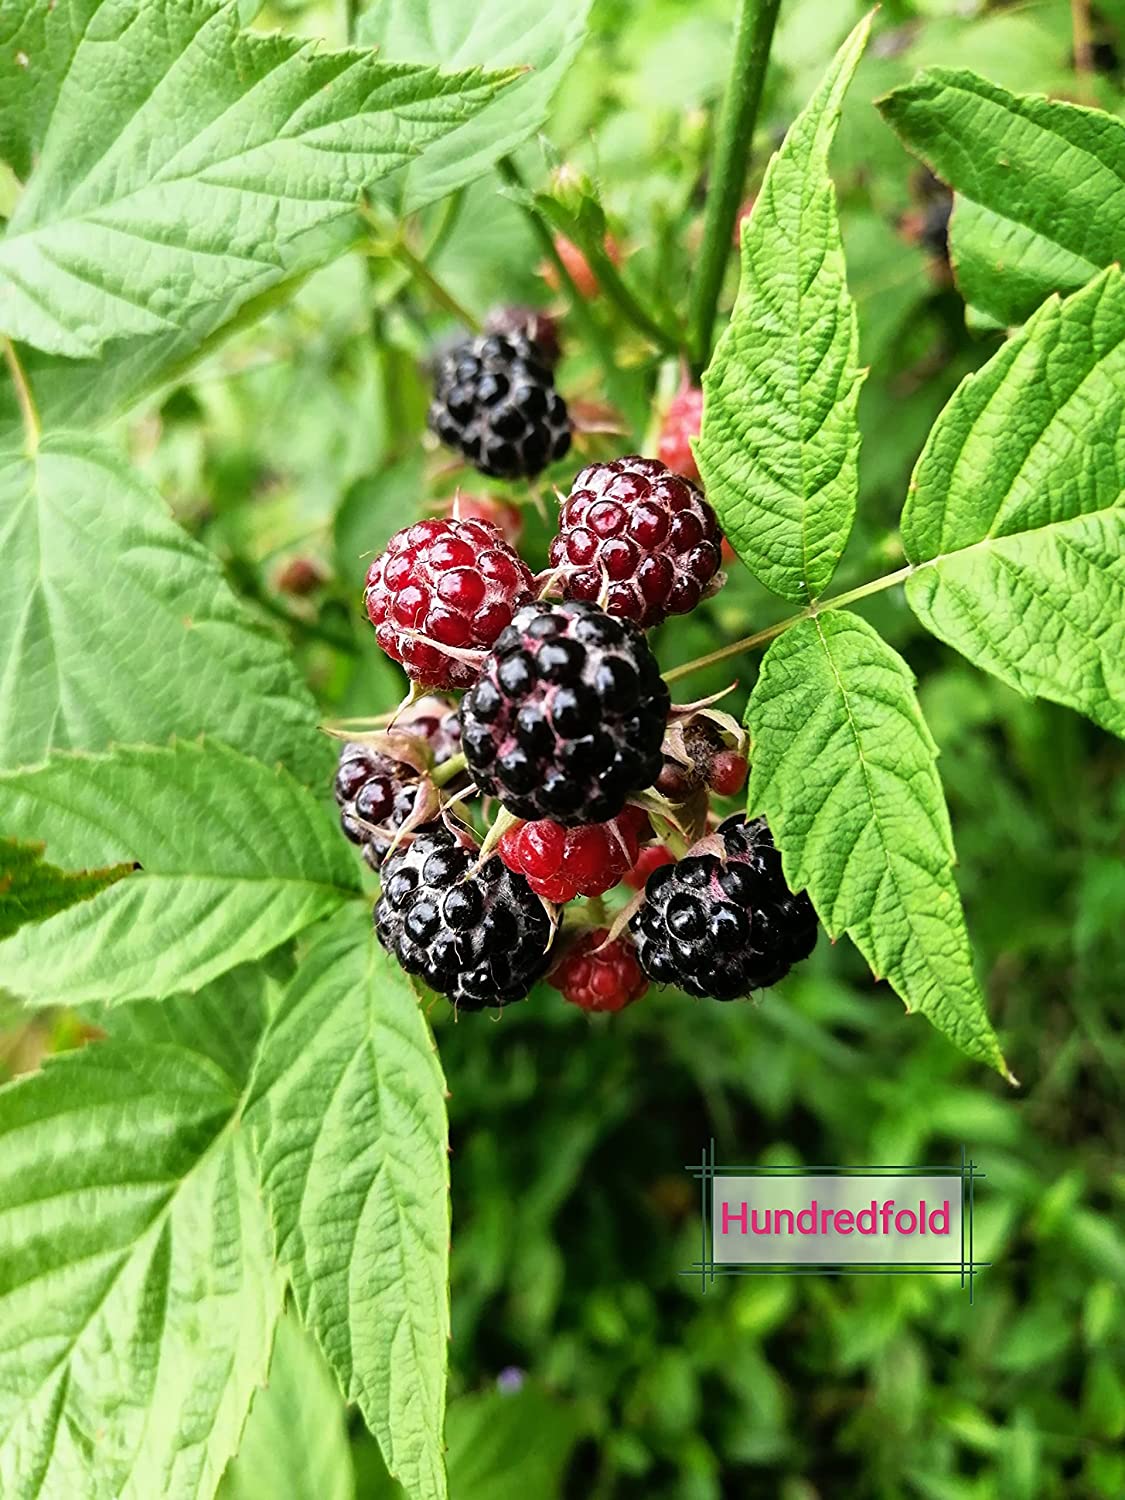 Ontario Grown Black Raspberry 20 Fruit Seeds - Non-GMO Canada Native Wild Blackcap Whitebark Raspberry, Bramble, Producing Tasty Fruits & Fragrant Flowers